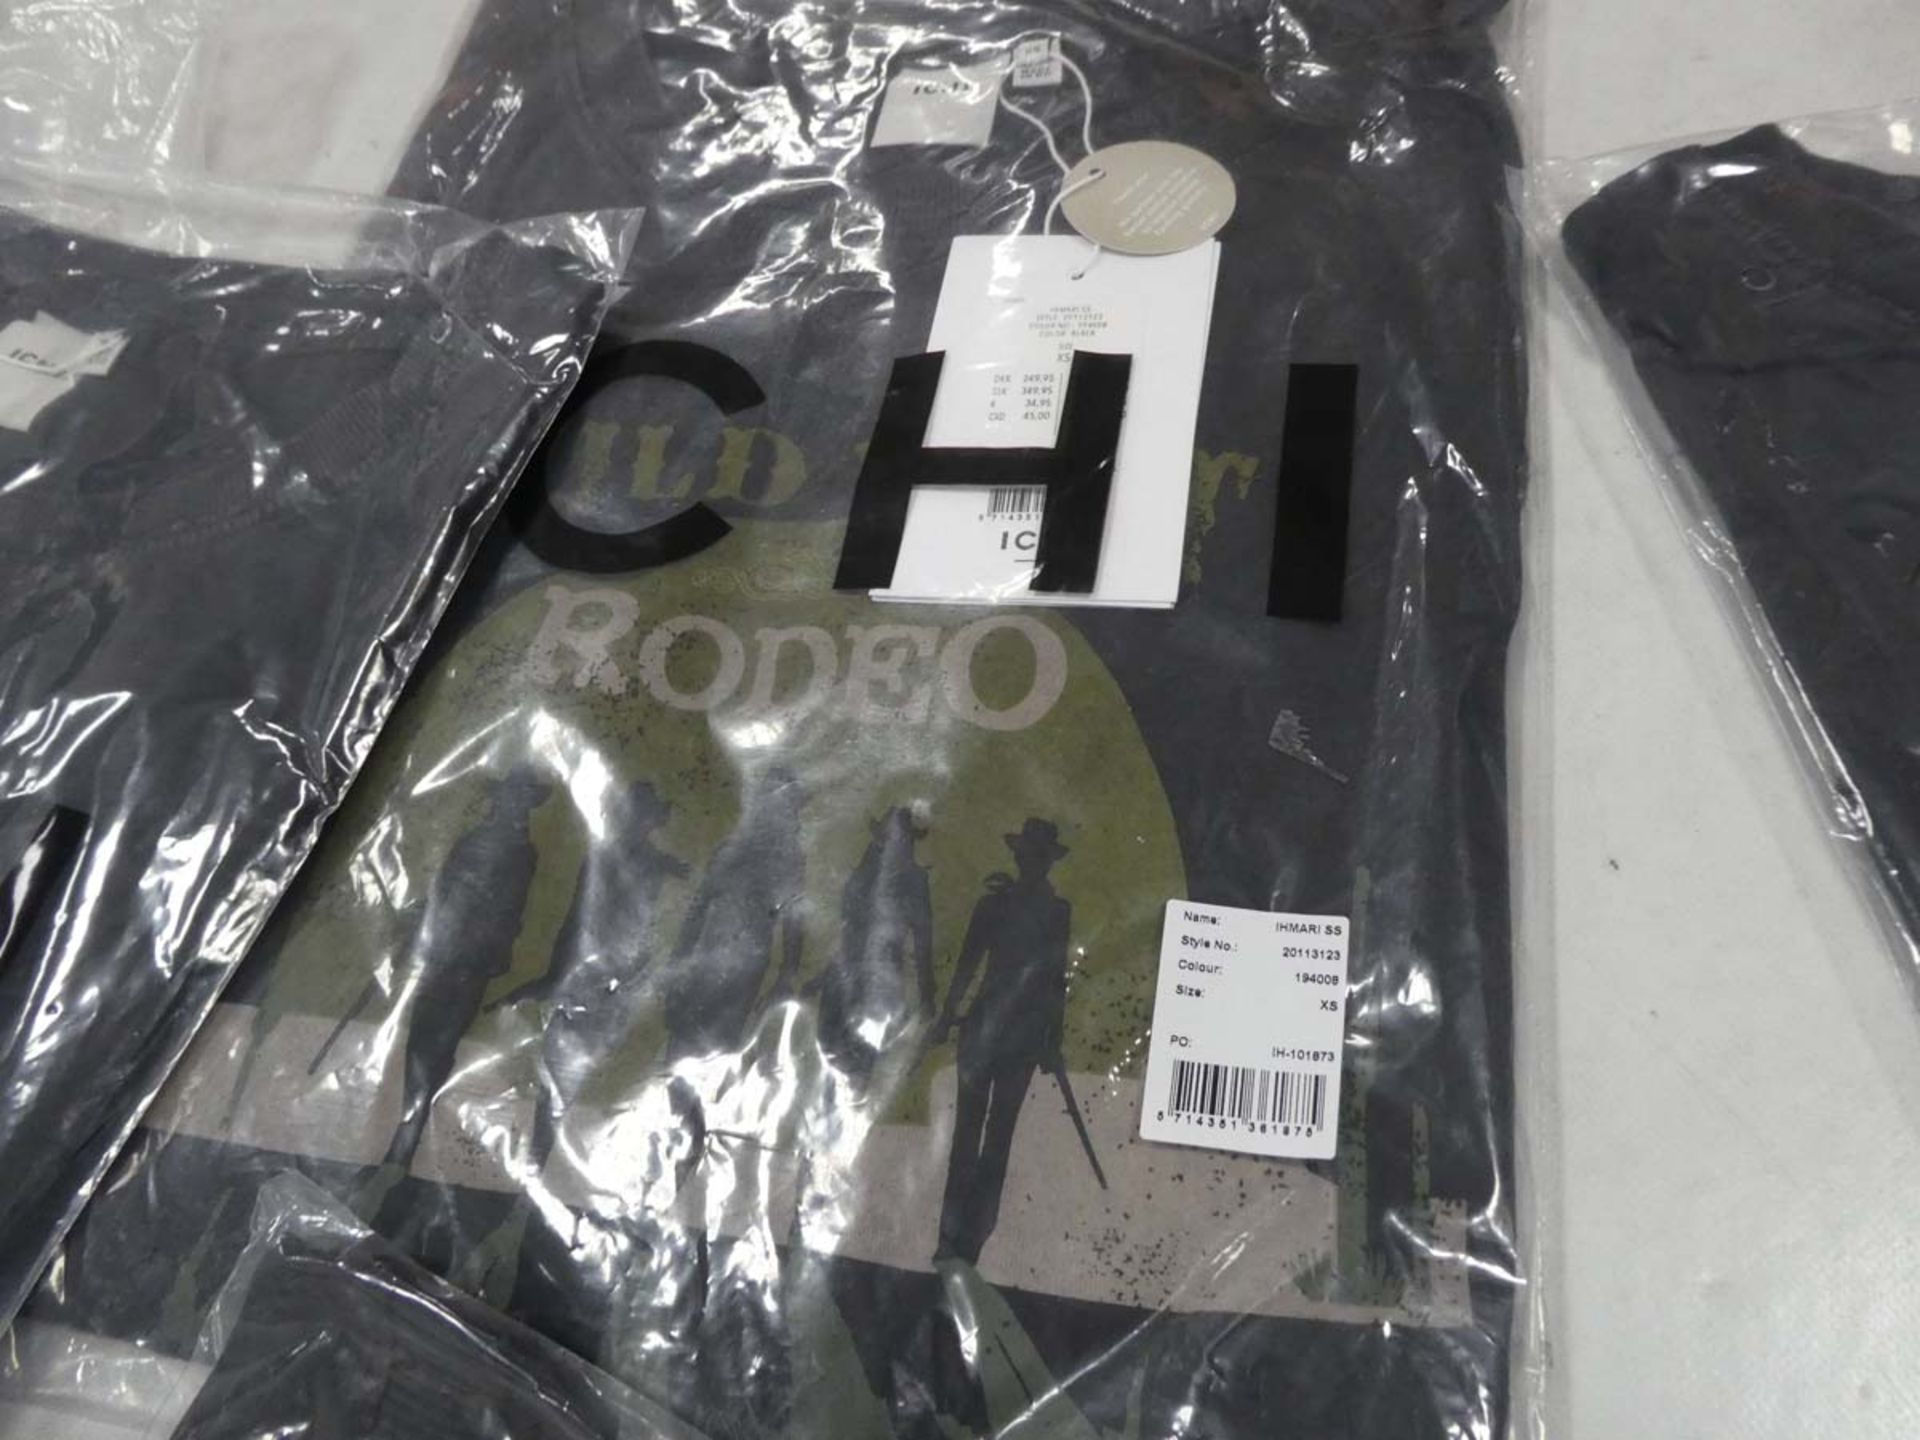 Bag containing nine Ichi Wild West Rodeo t shirts, various sizes - Image 2 of 2